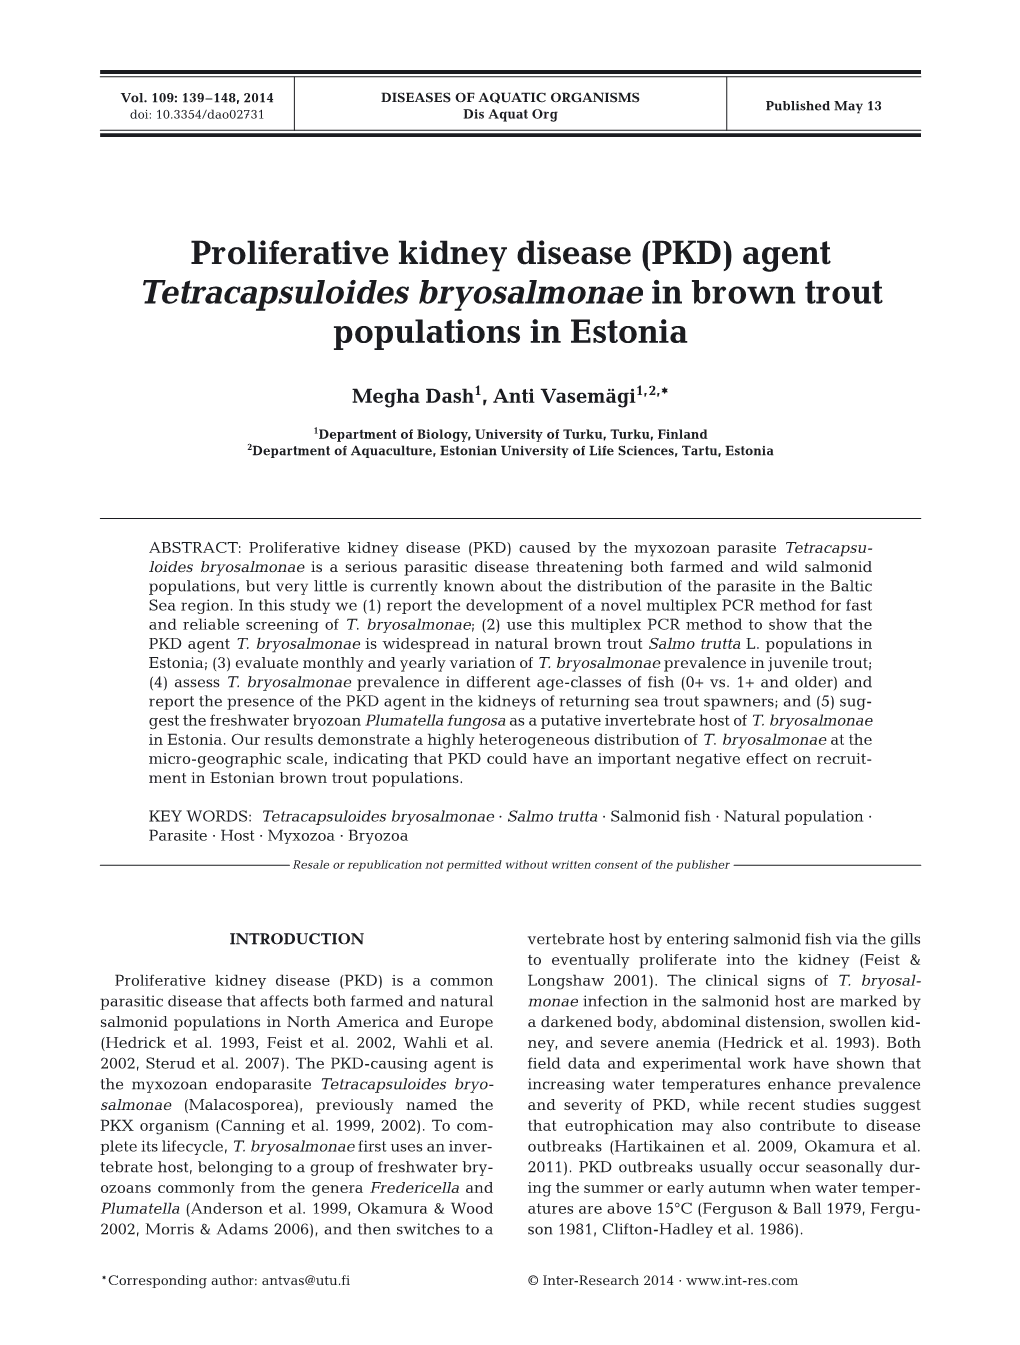 Proliferative Kidney Disease (PKD) Agent Tetracapsuloides Bryosalmonae in Brown Trout Populations in Estonia